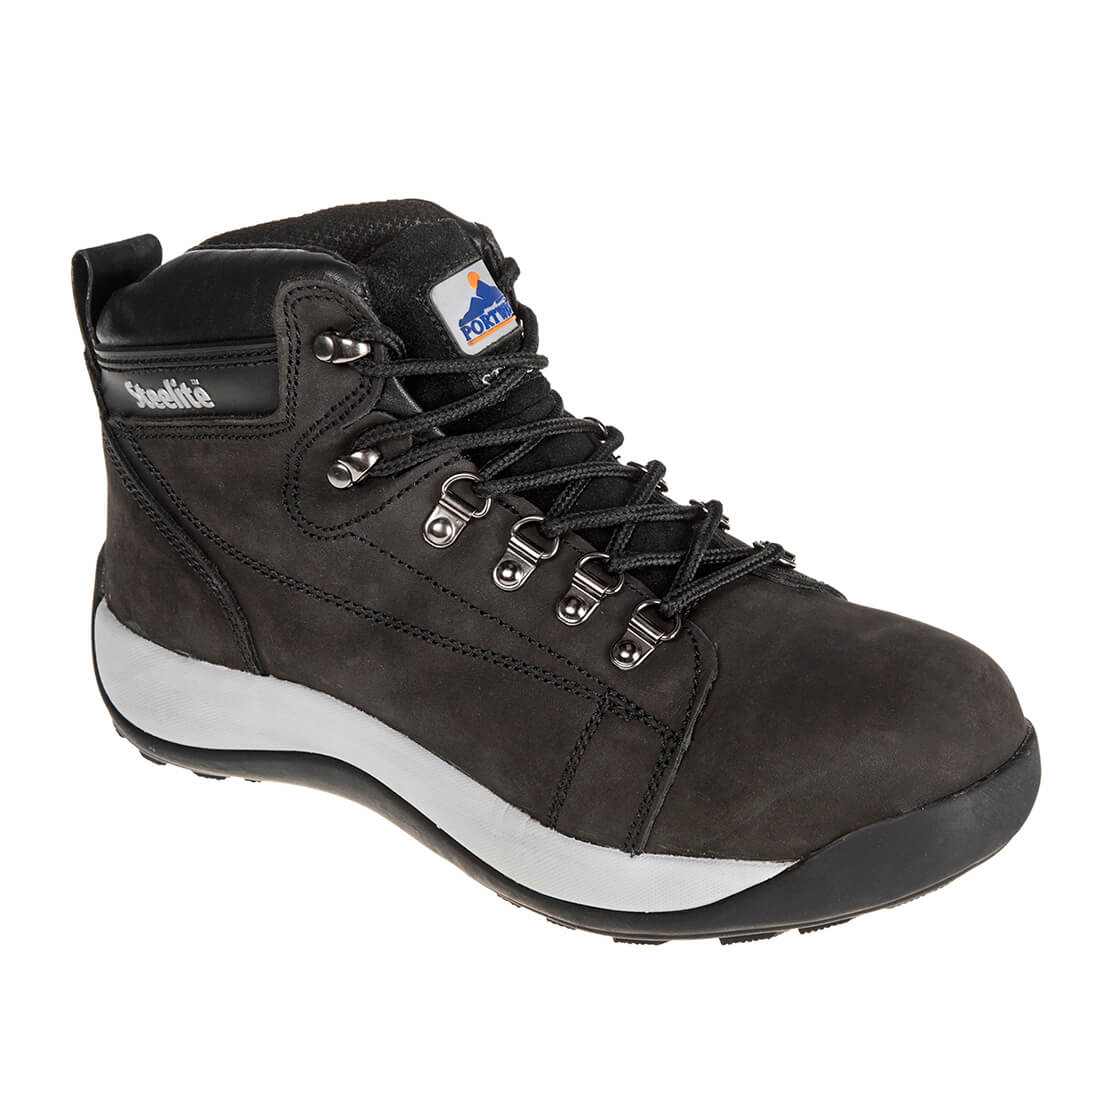 Portwest Steelite SB HRO Mid Cut Nubuck Safety Boots Black Size 10